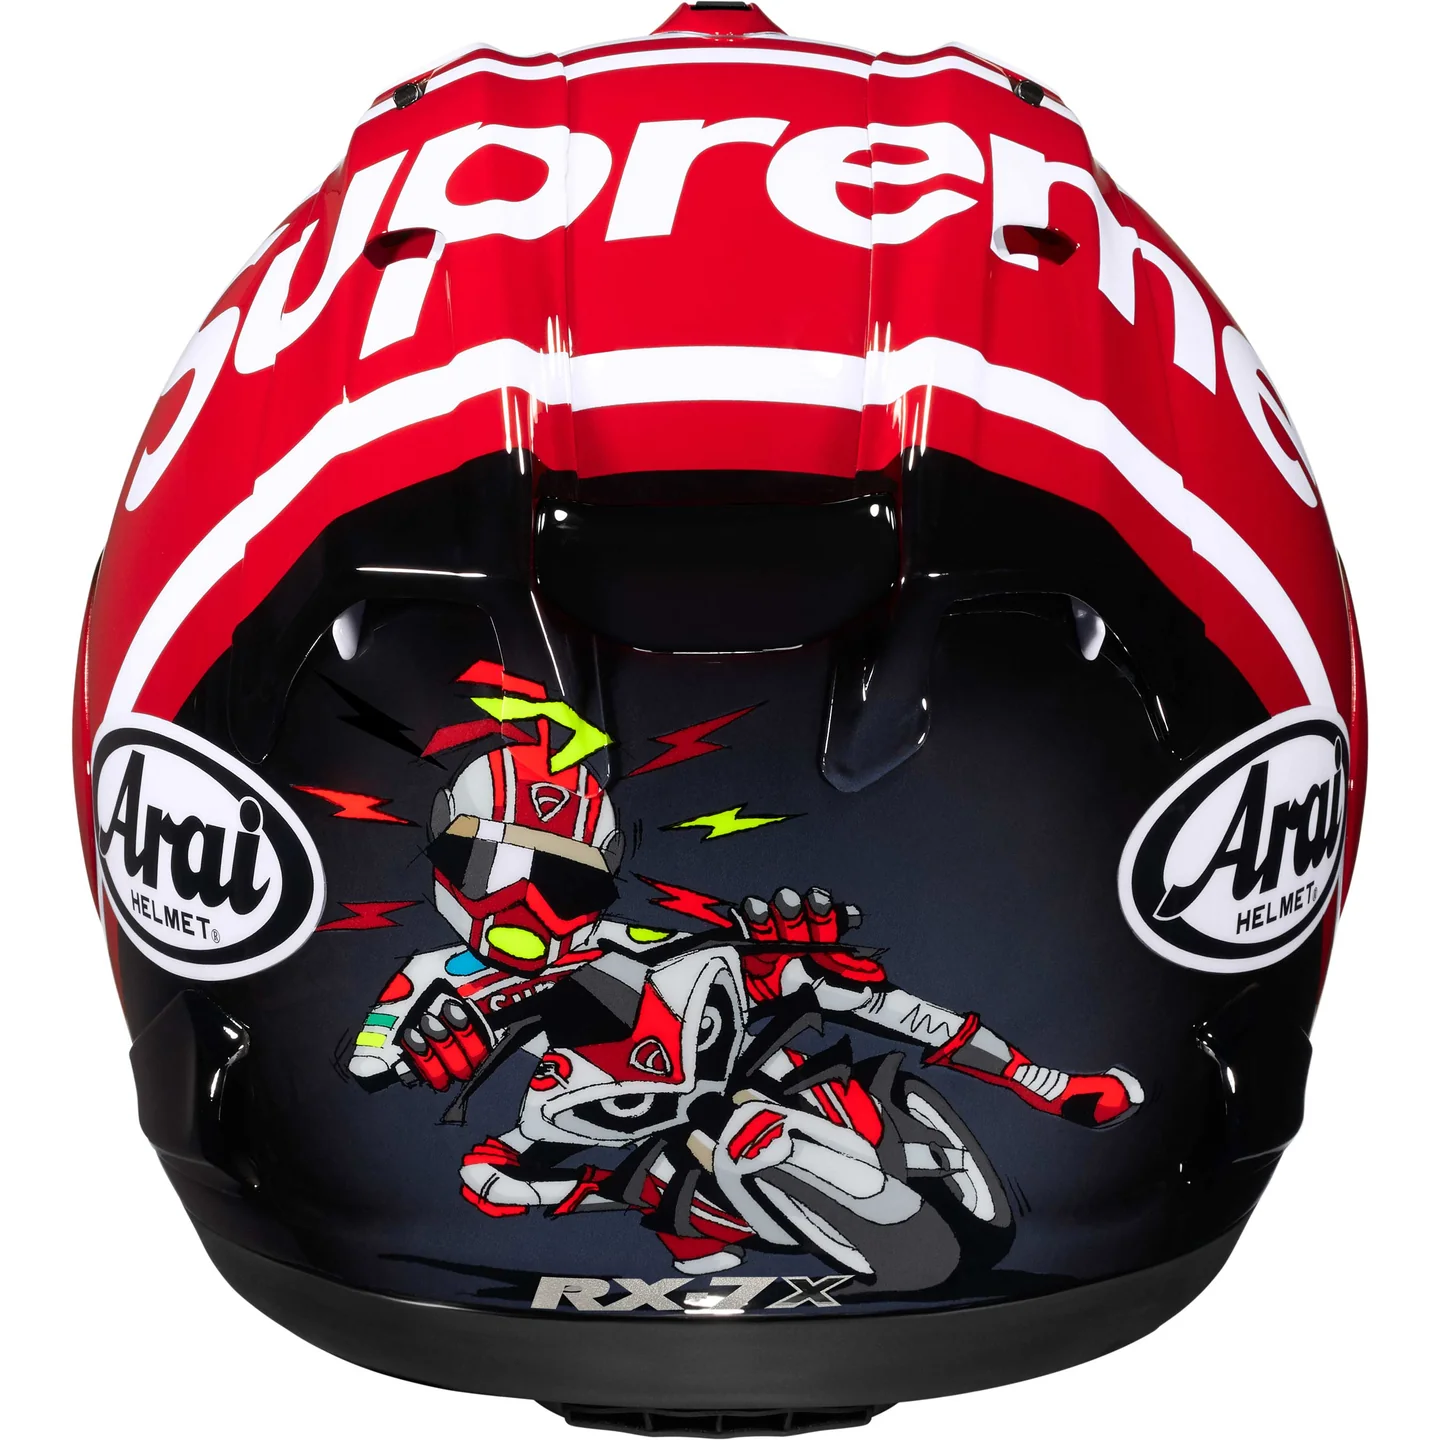 Supreme®/Ducati®/Arai® Corsair-X Helmet